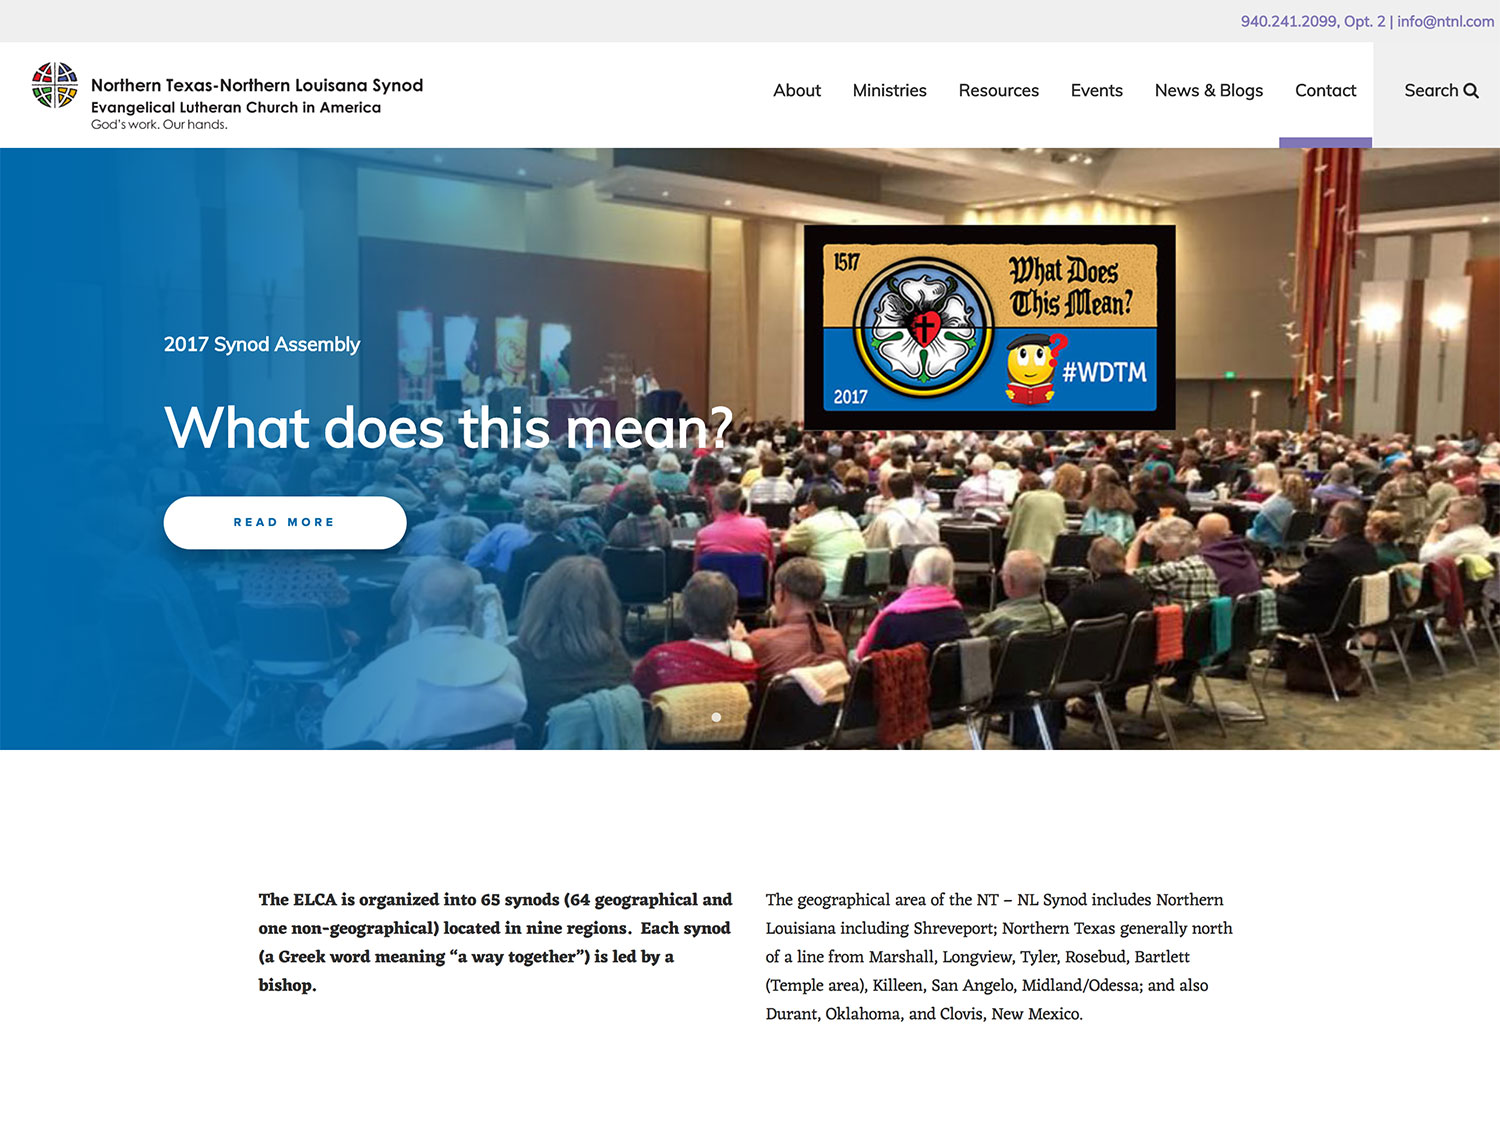 Northern Texas-Northern Louisiana Synod homepage